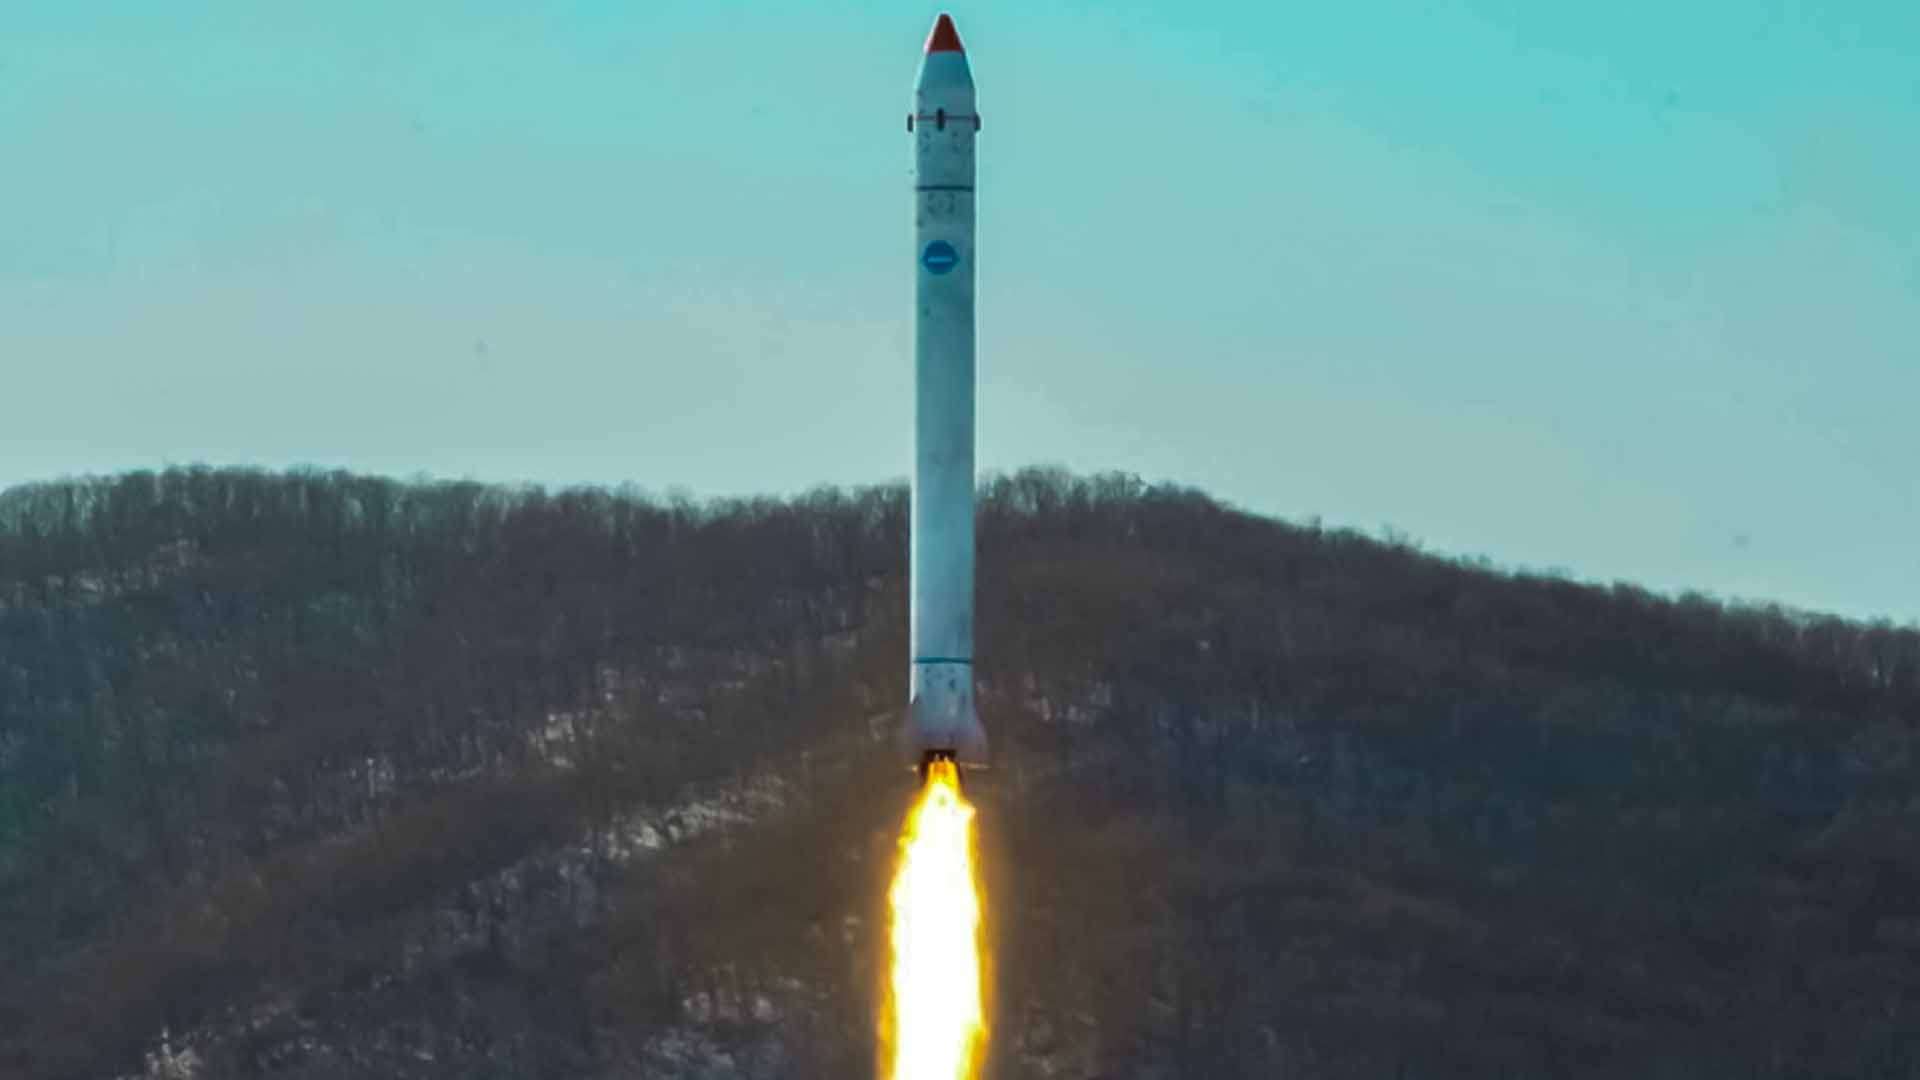 South Korea opposes North Korean satellite acquisitions